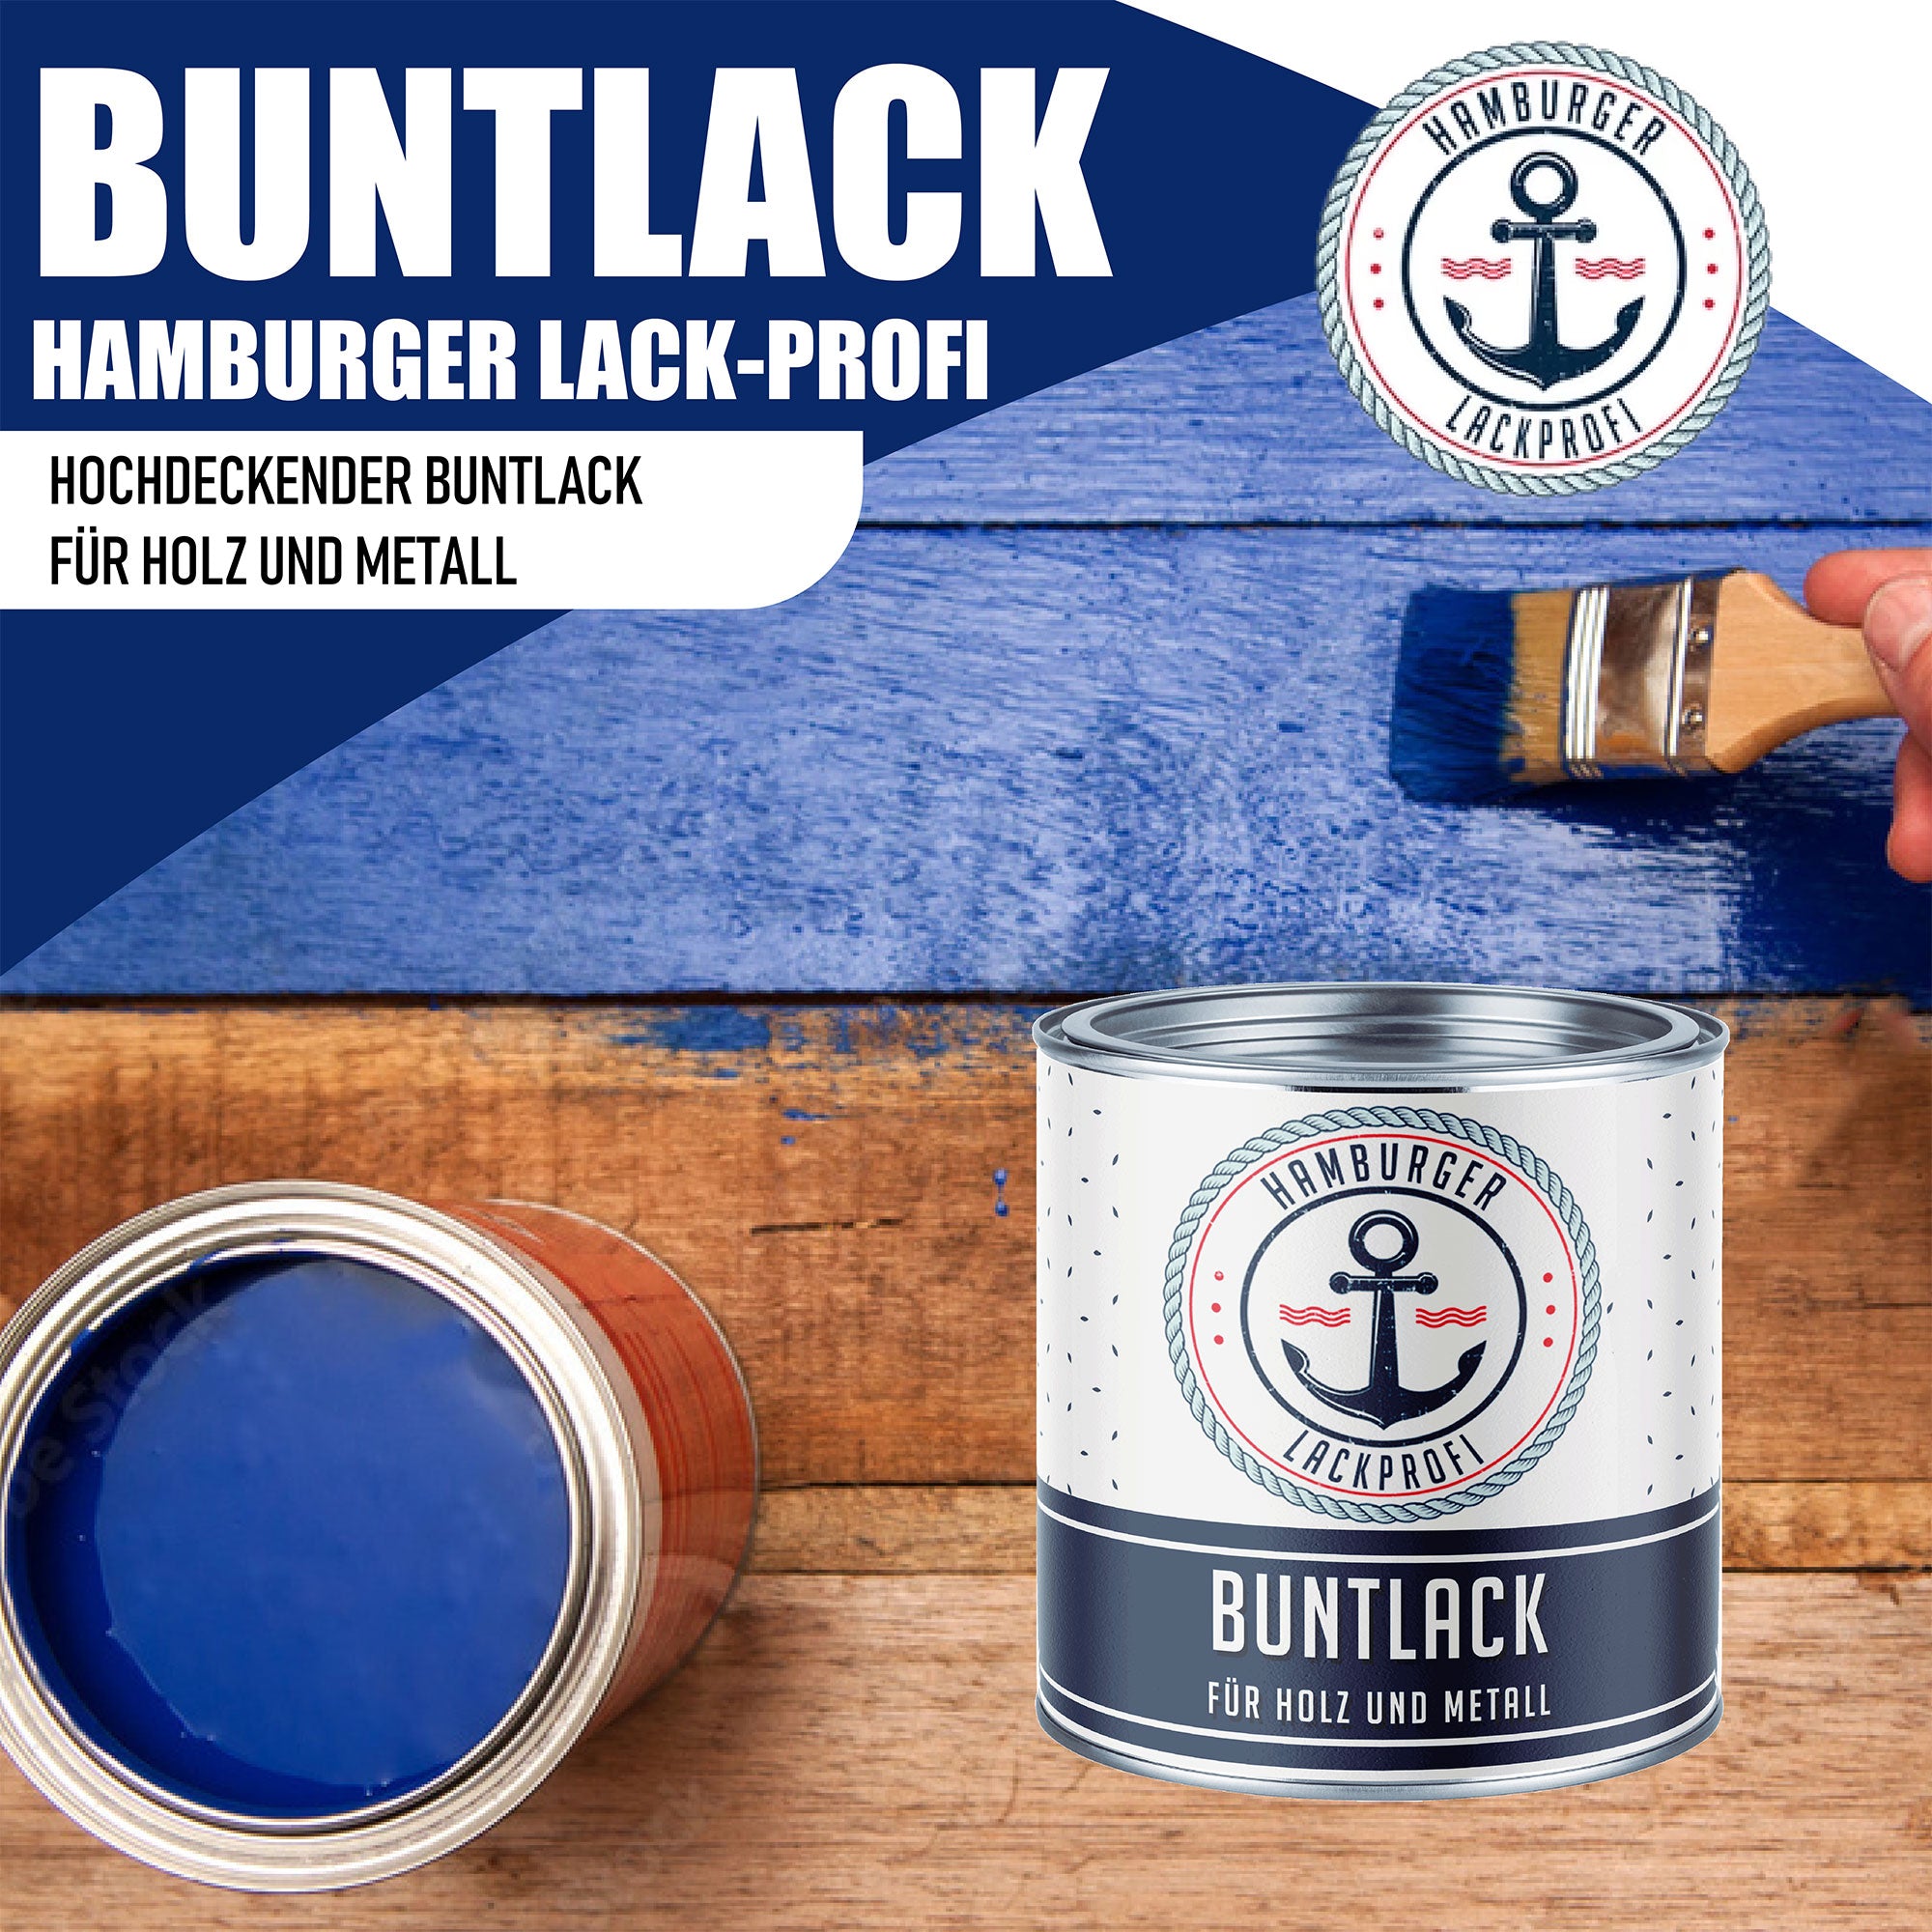 Hamburger Lack-Profi Buntlack in Rotbraun RAL 8012 mit Lackierset (X300) & Verdünnung (1 L) - 30% Sparangebot